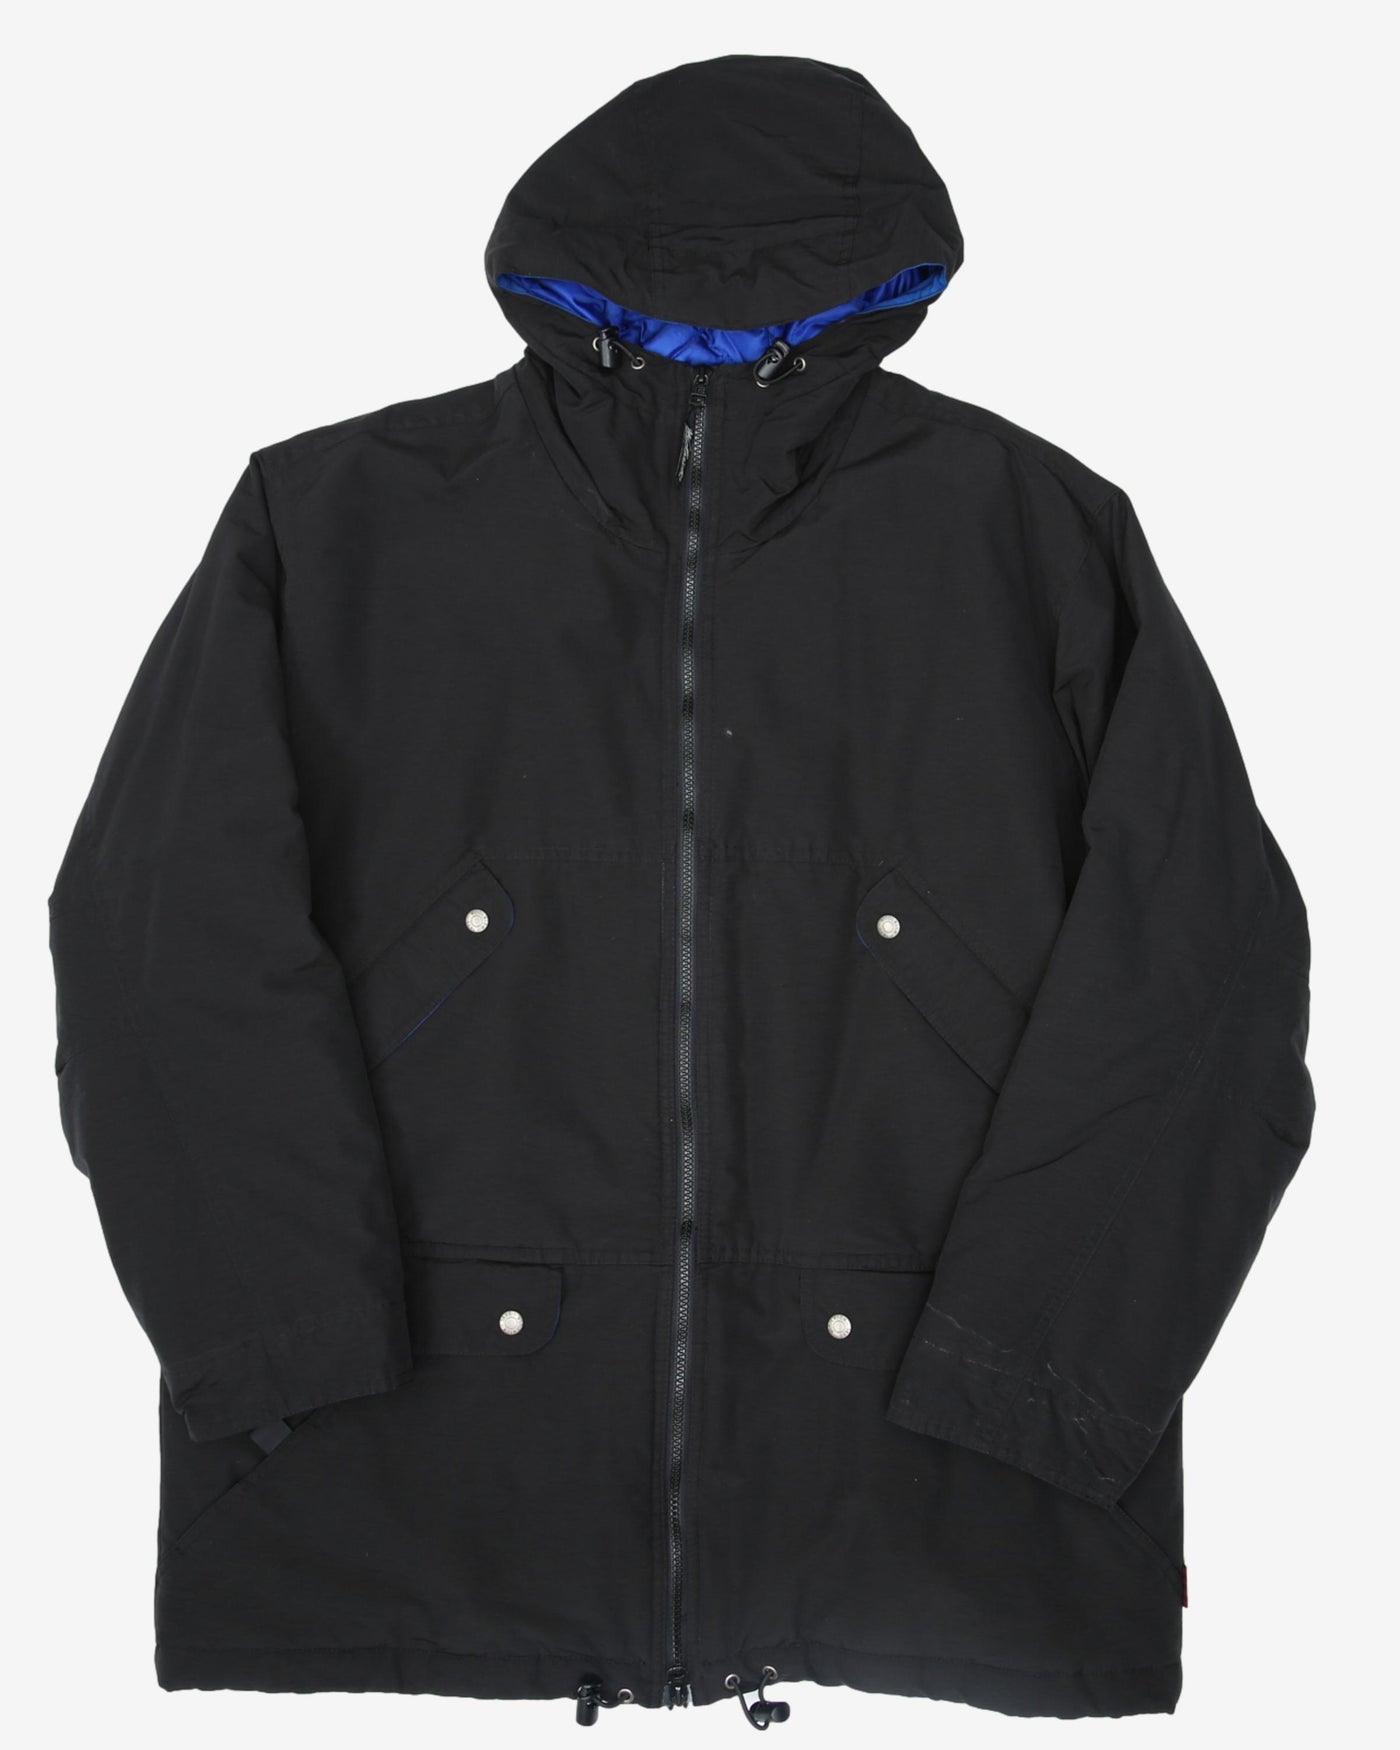 Vintage Woolrich Black / Blue Lined Heavyweight Hooded Parka Jacket - L